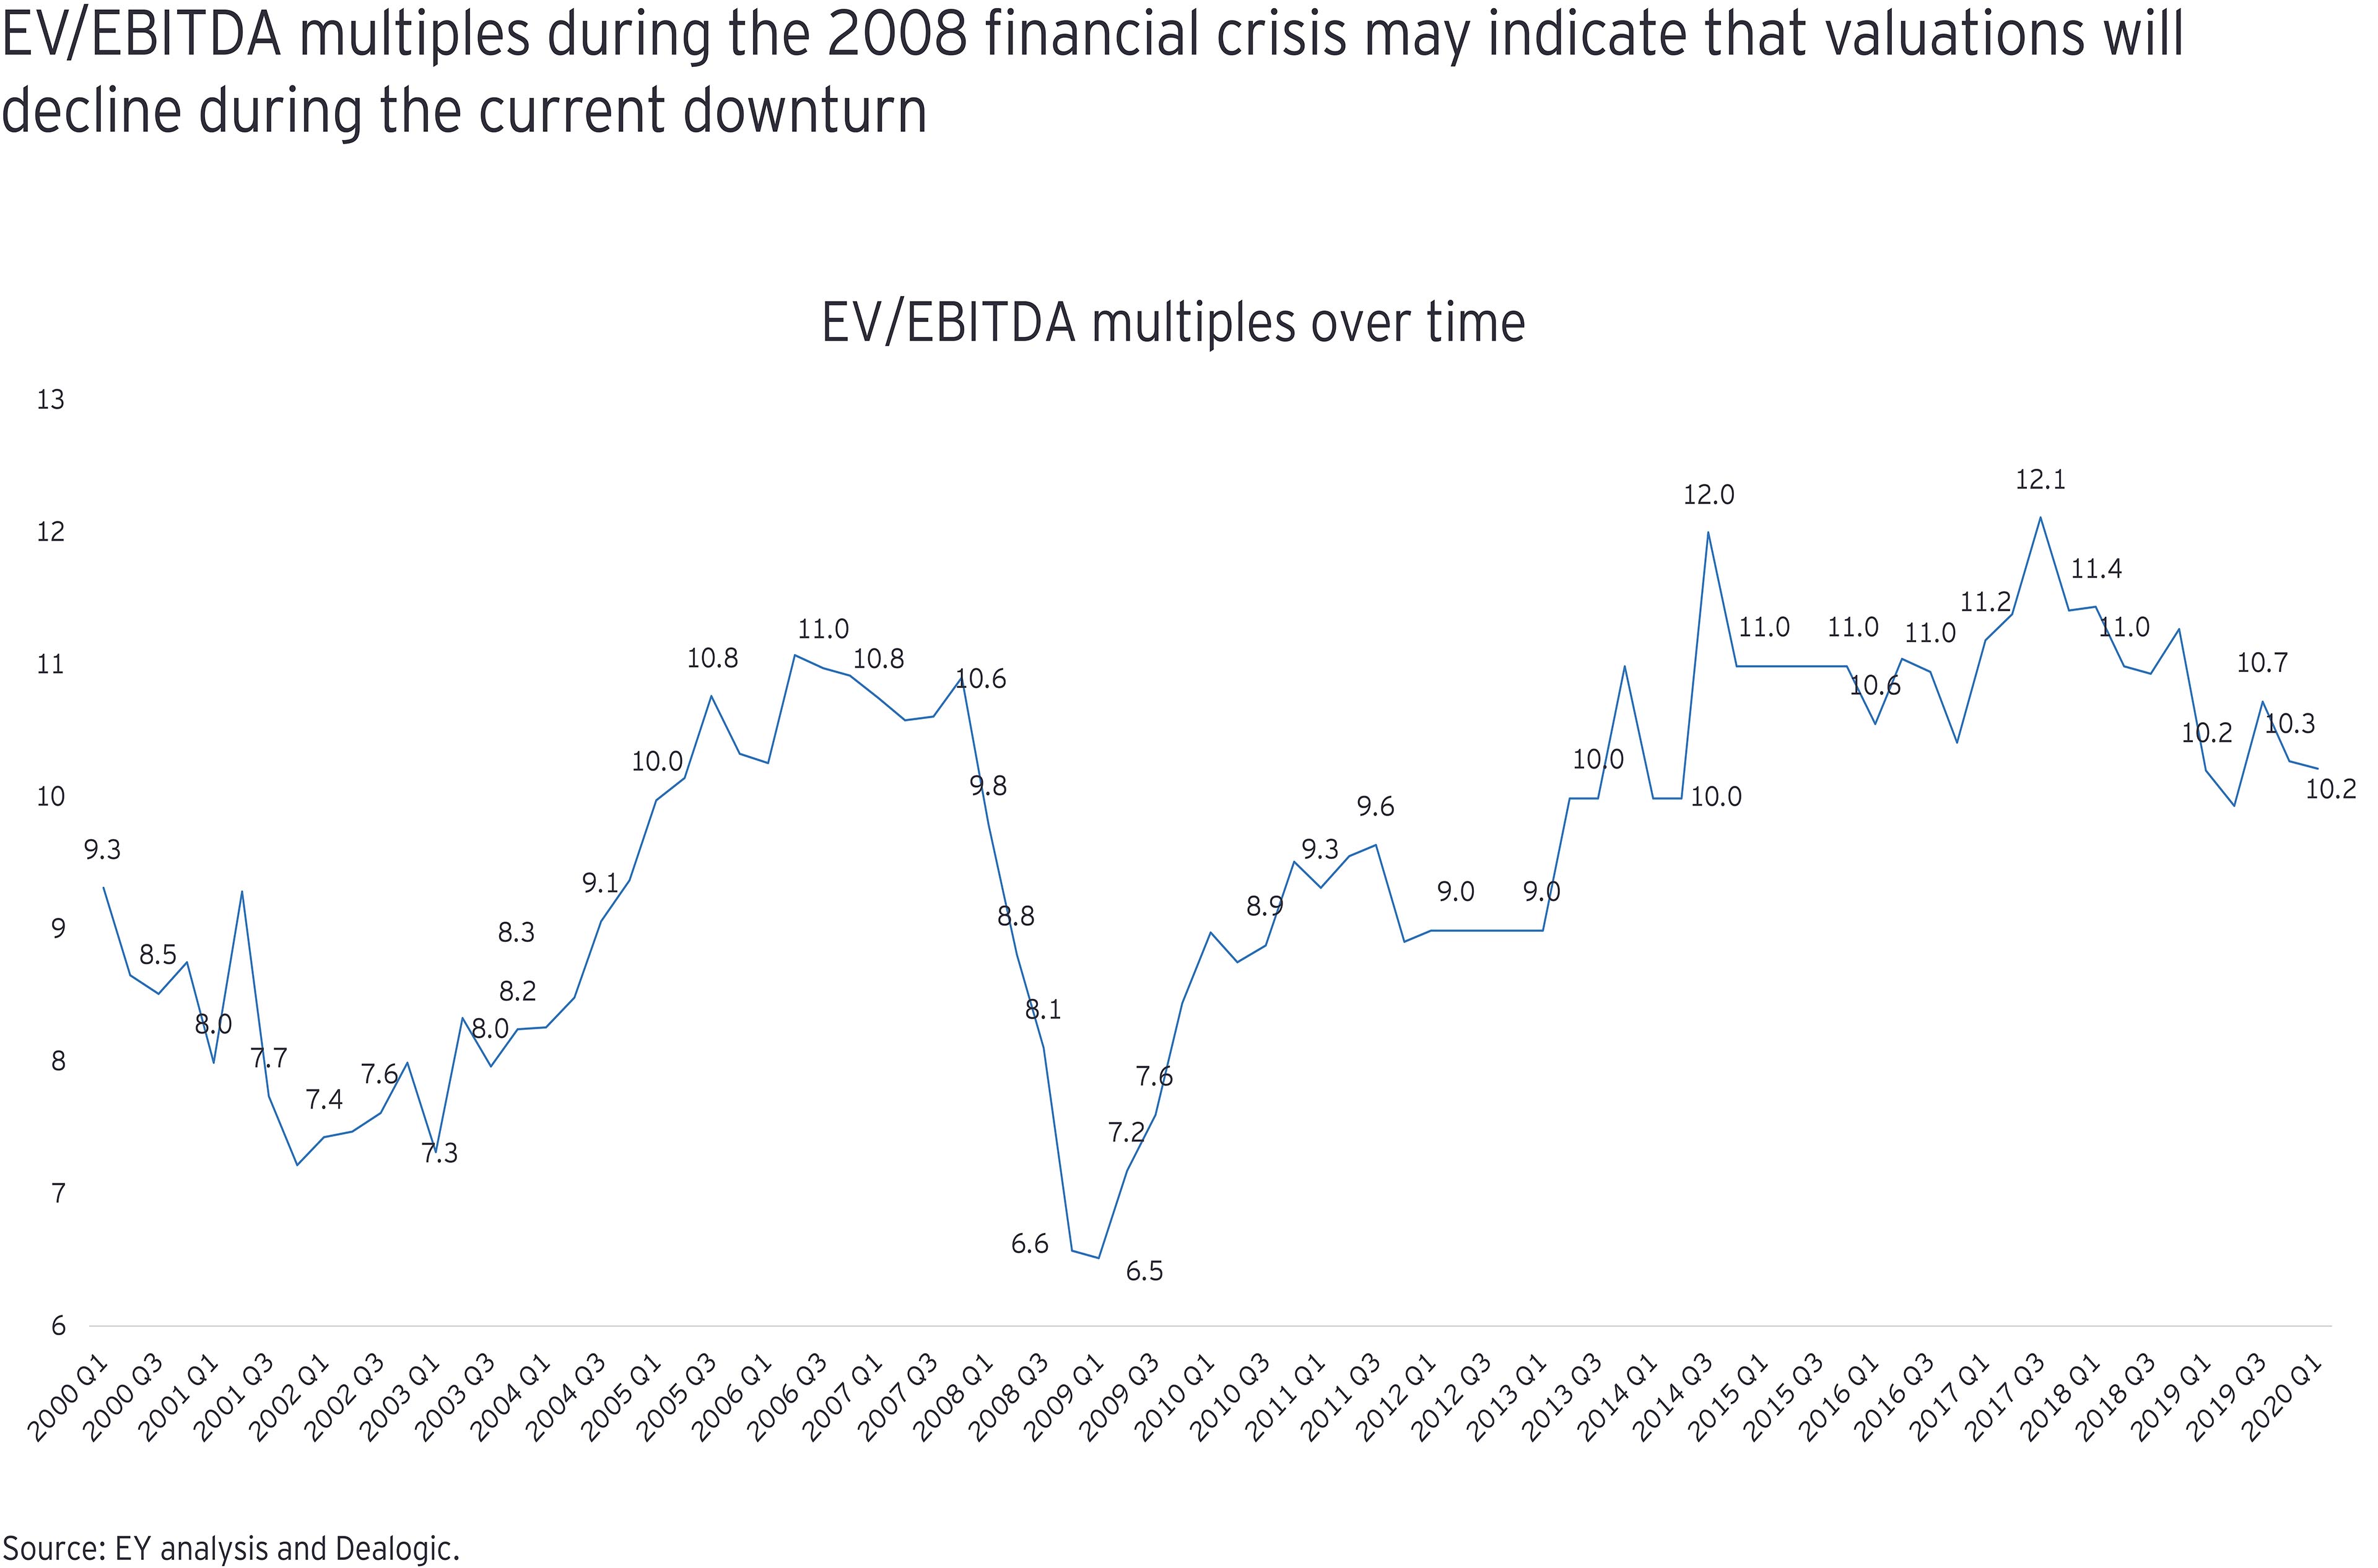 EV-EBITDA multiples since 2000 showing GFC decline